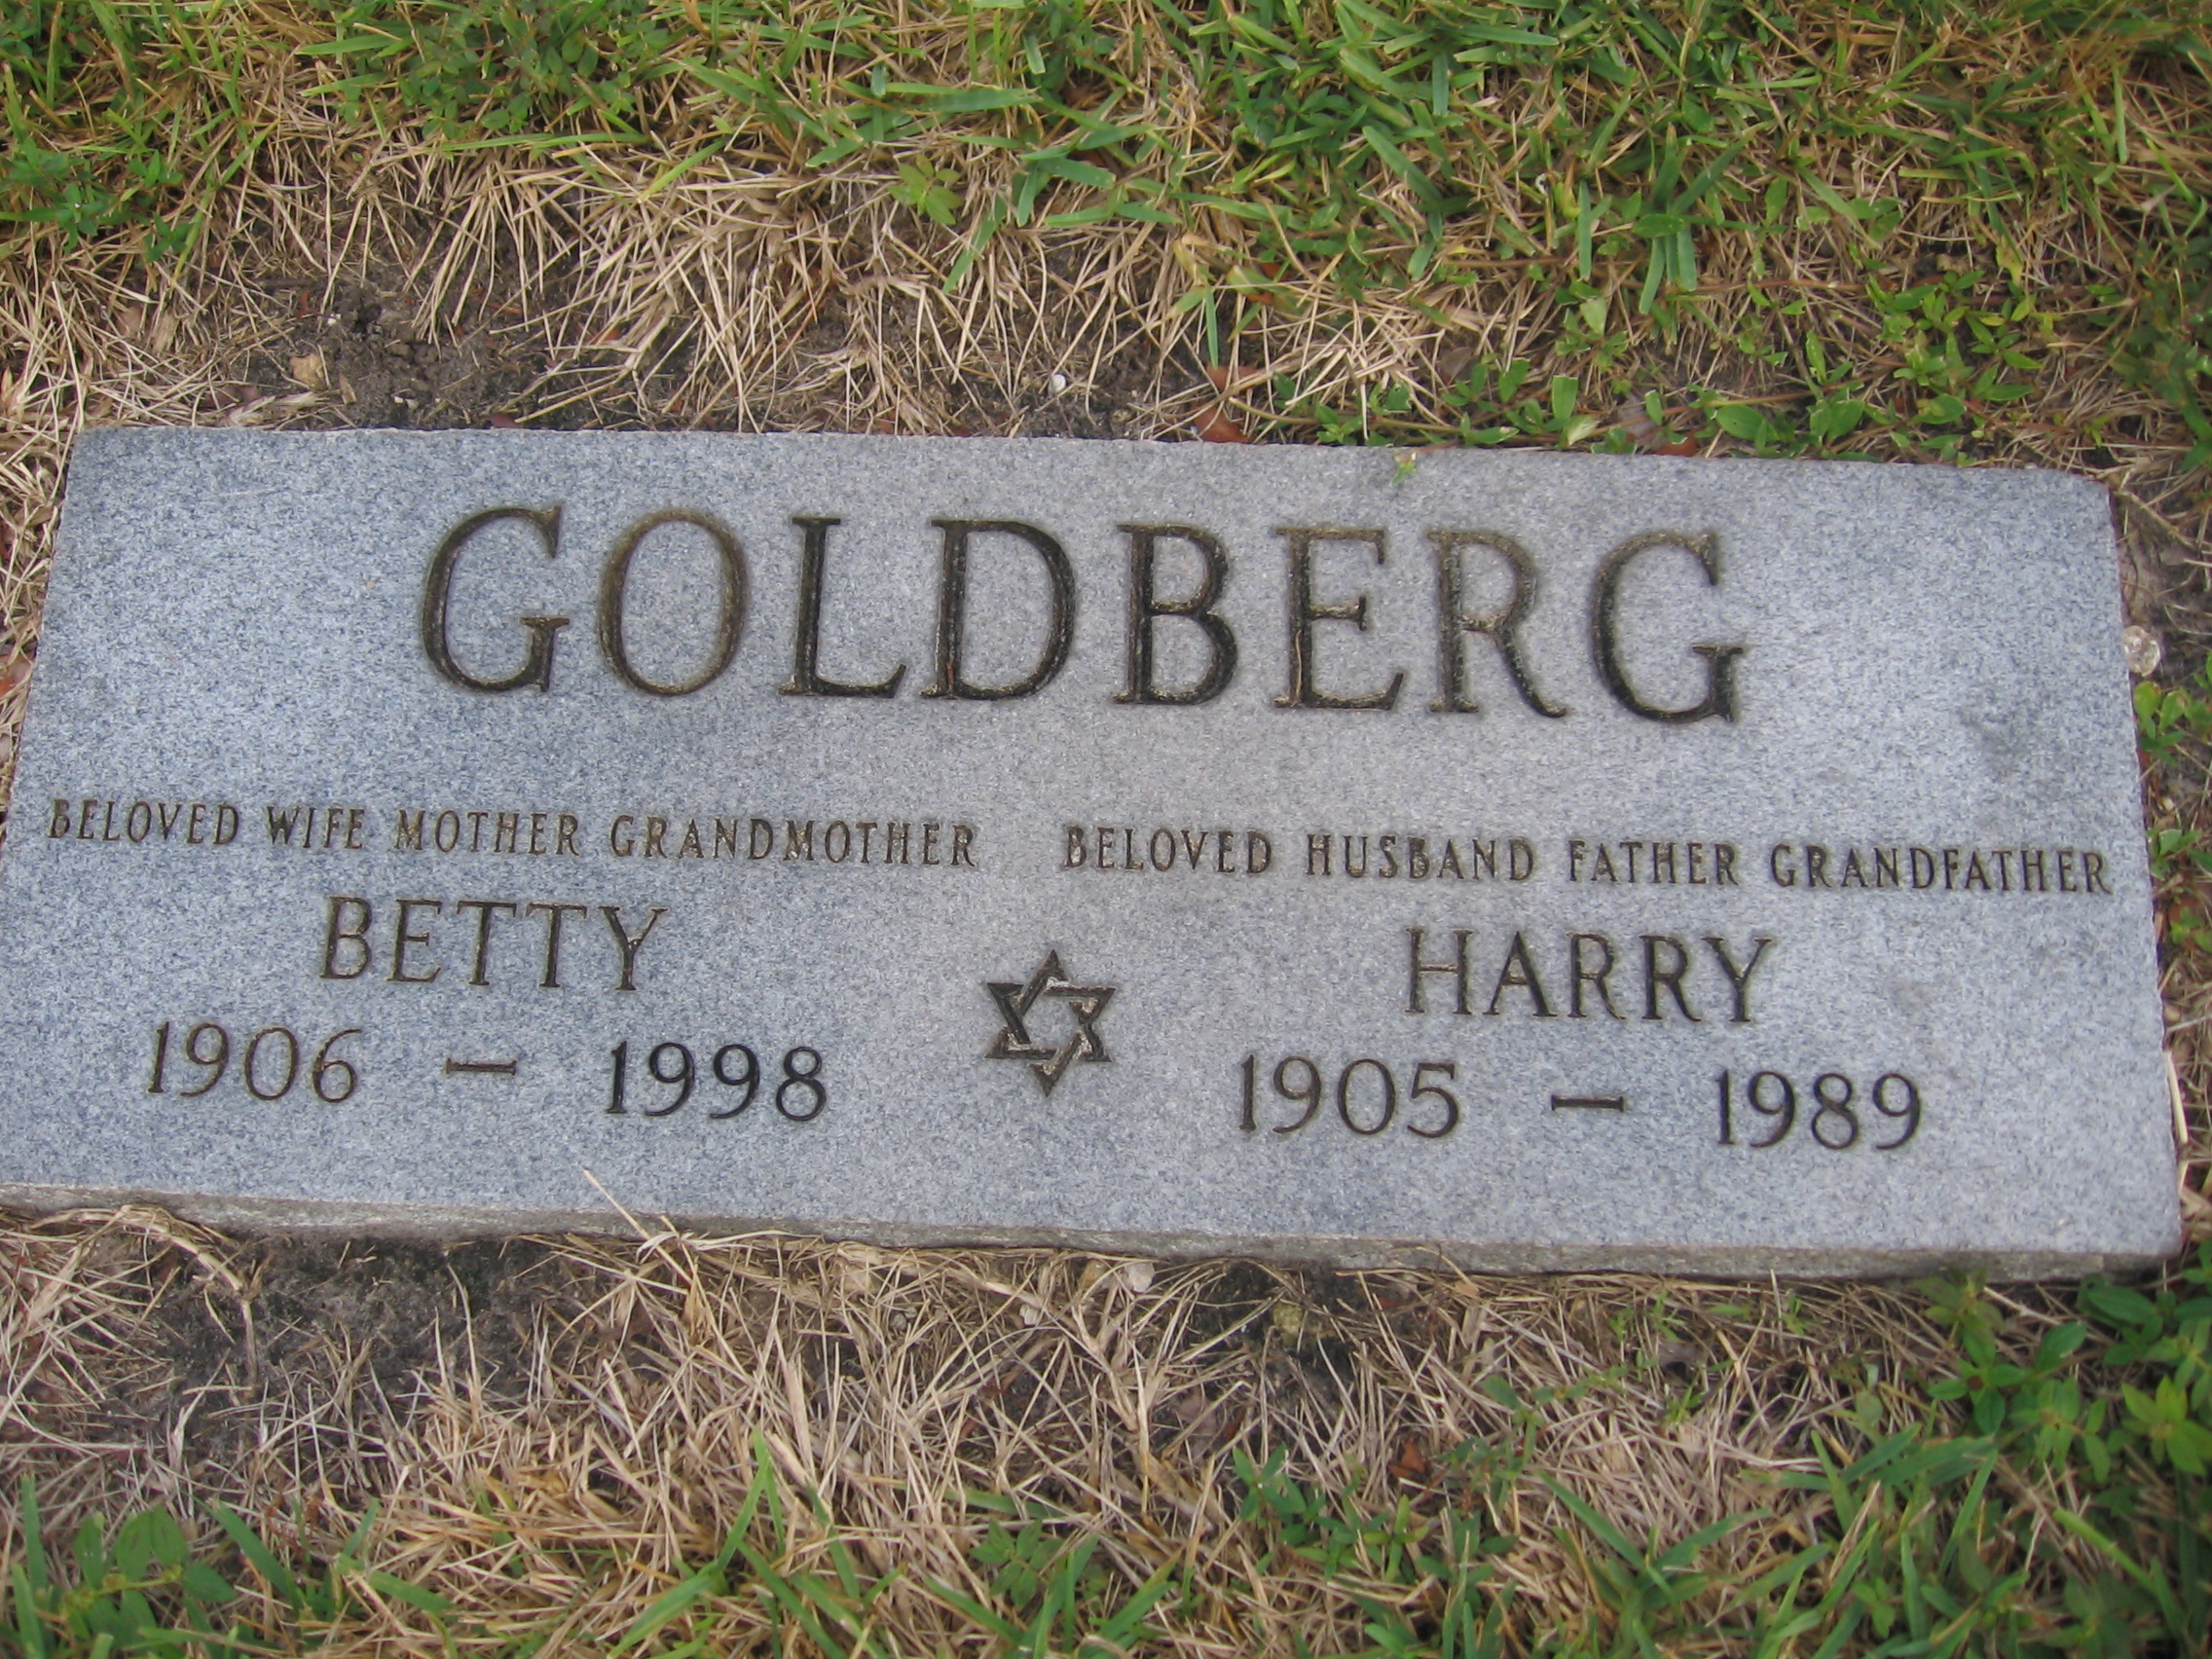 Harry Goldberg